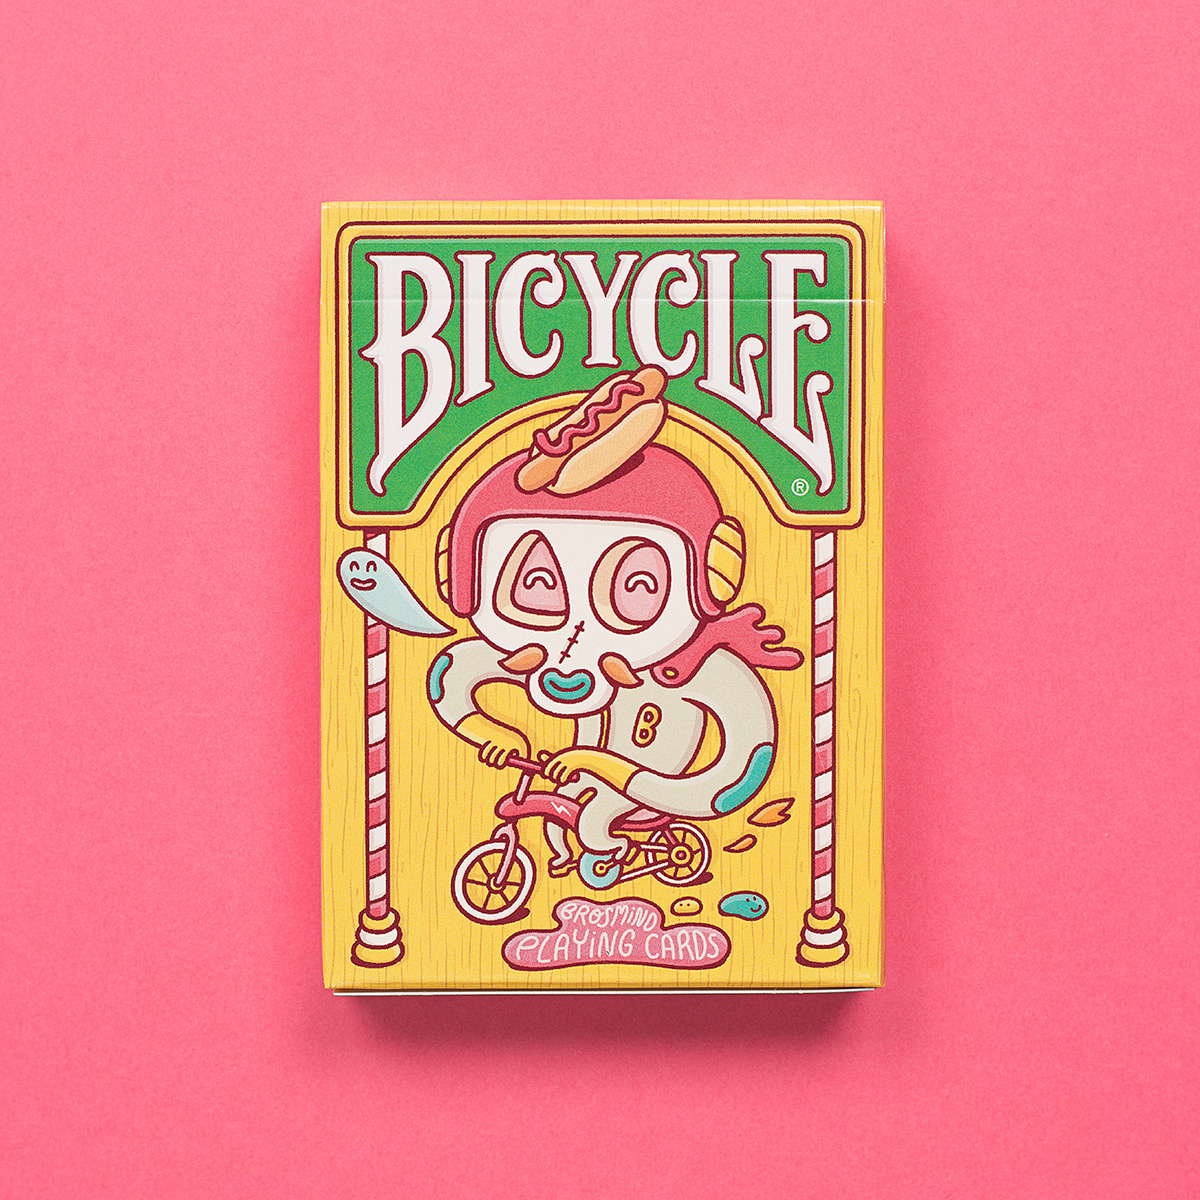 Bicycle brosmind Character Poker joker playing cards